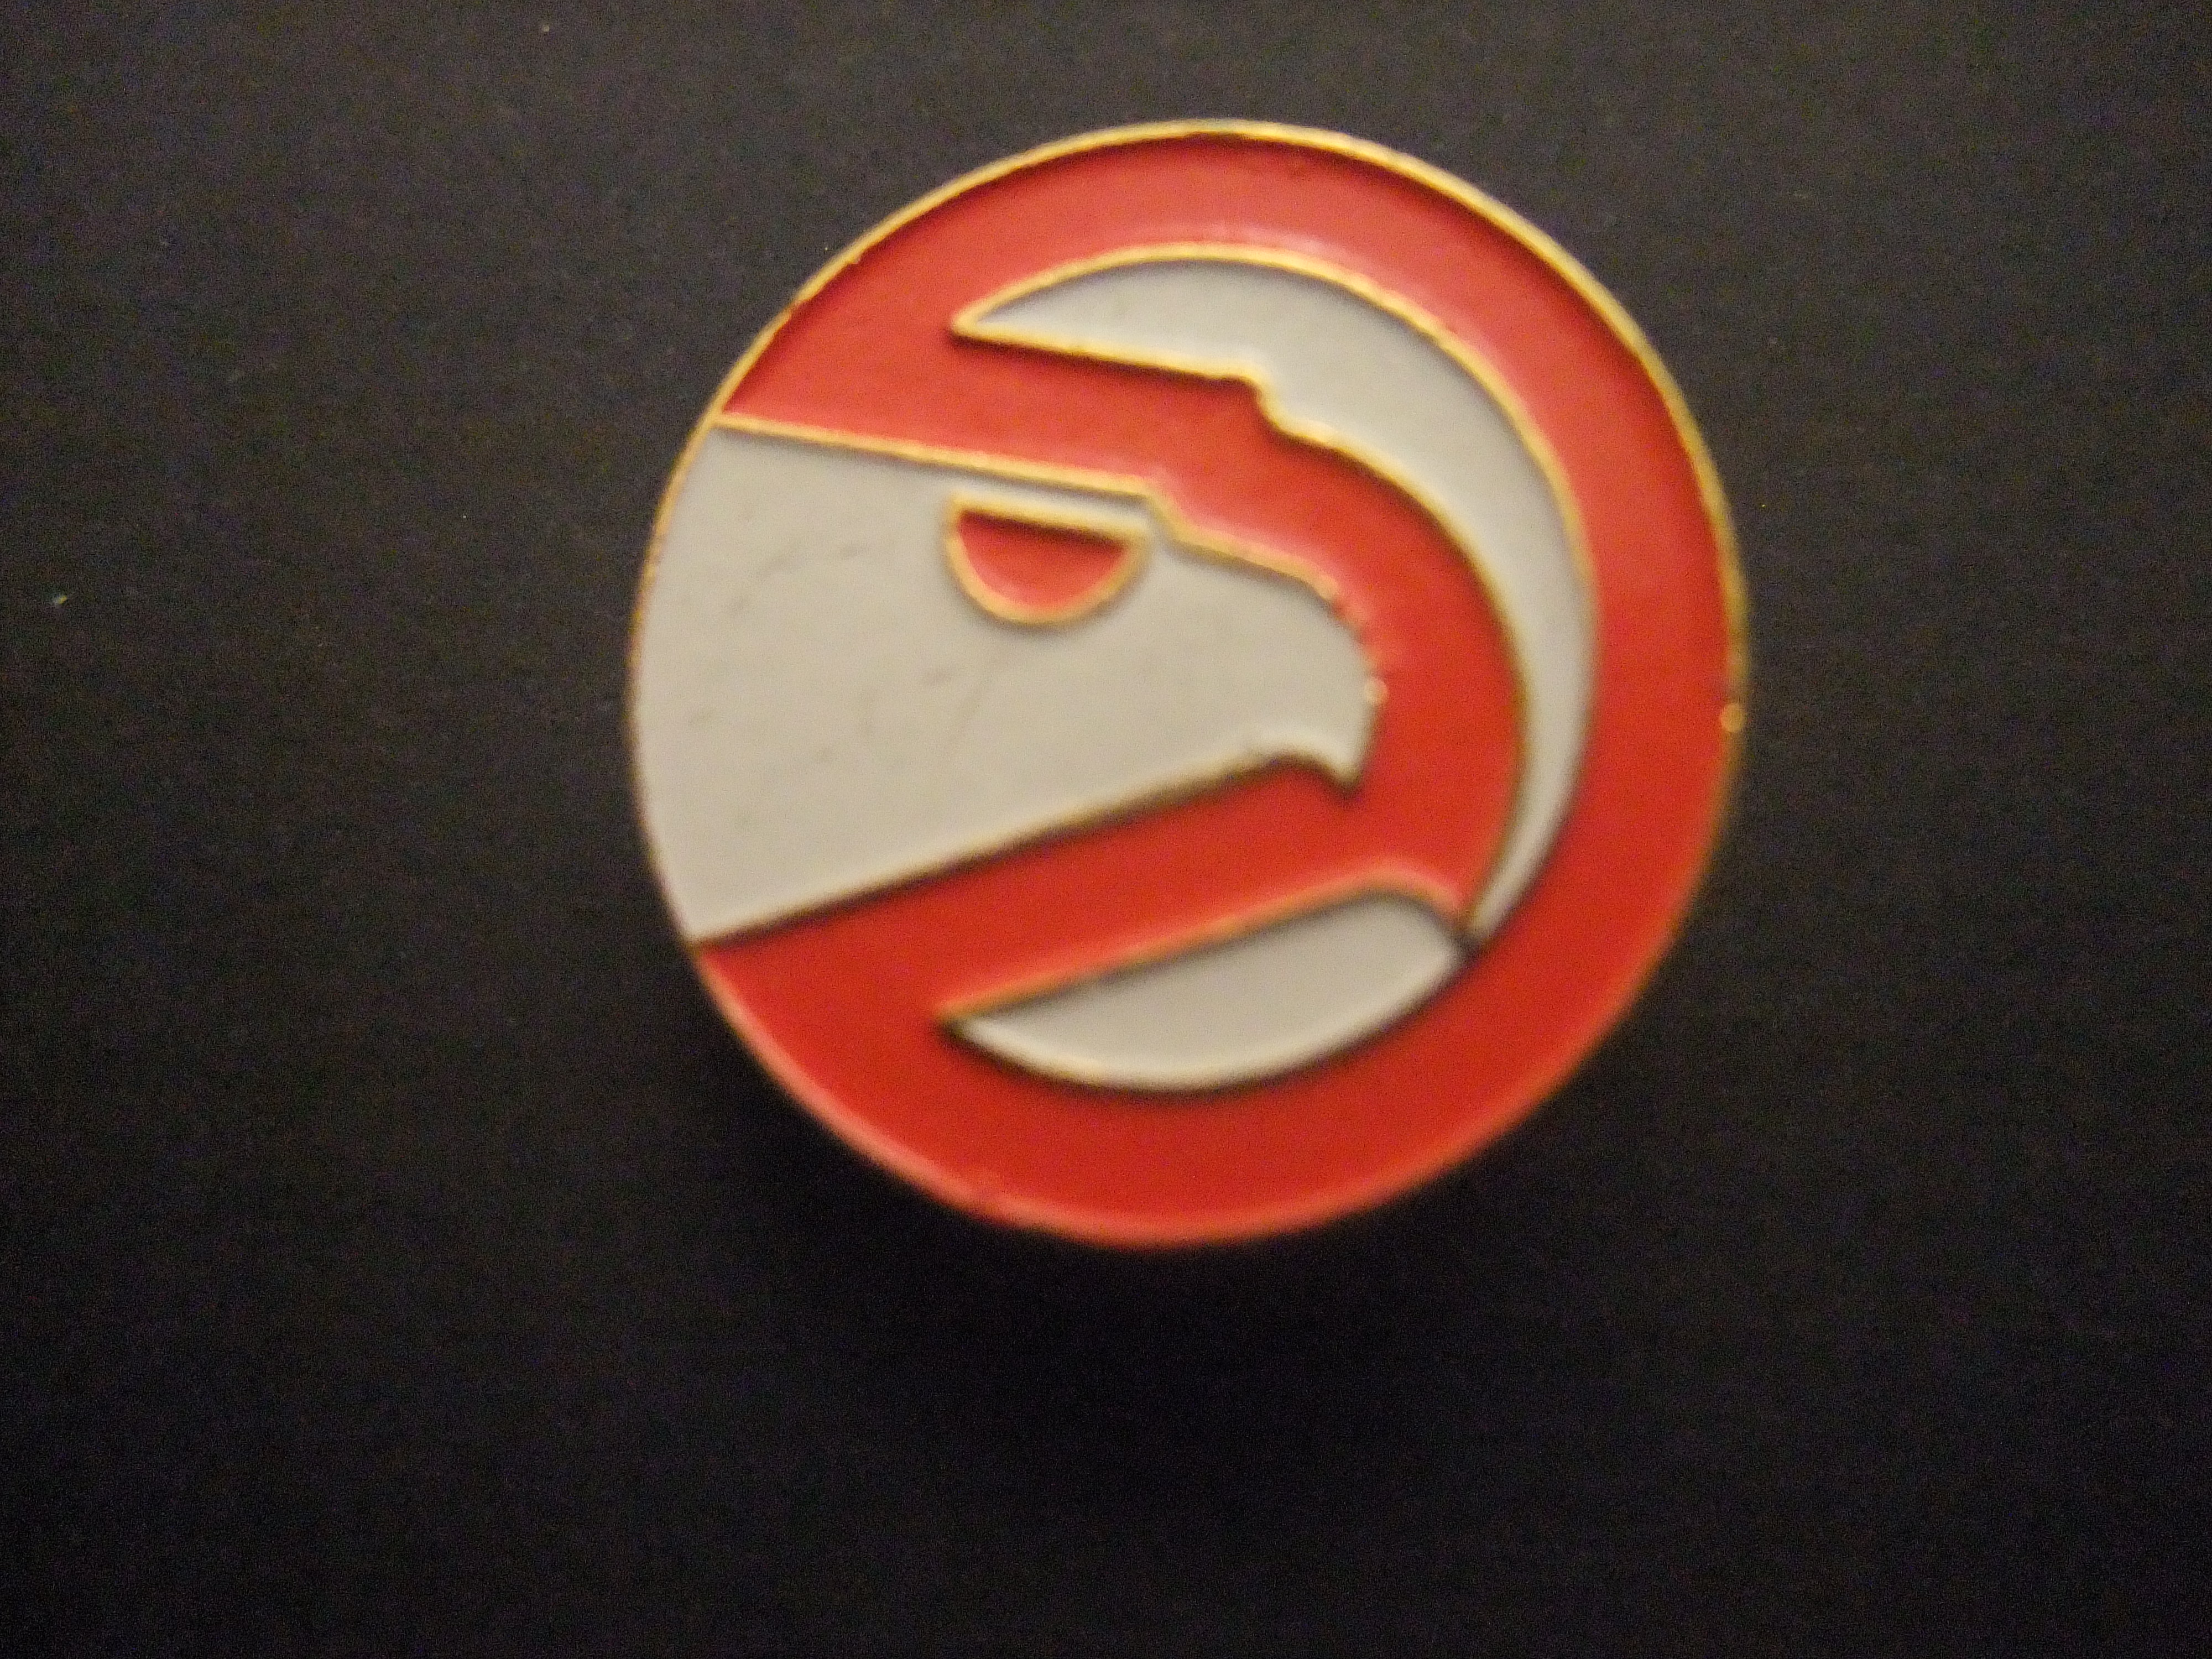 The Atlanta Hawks basketbalteam NBA logo